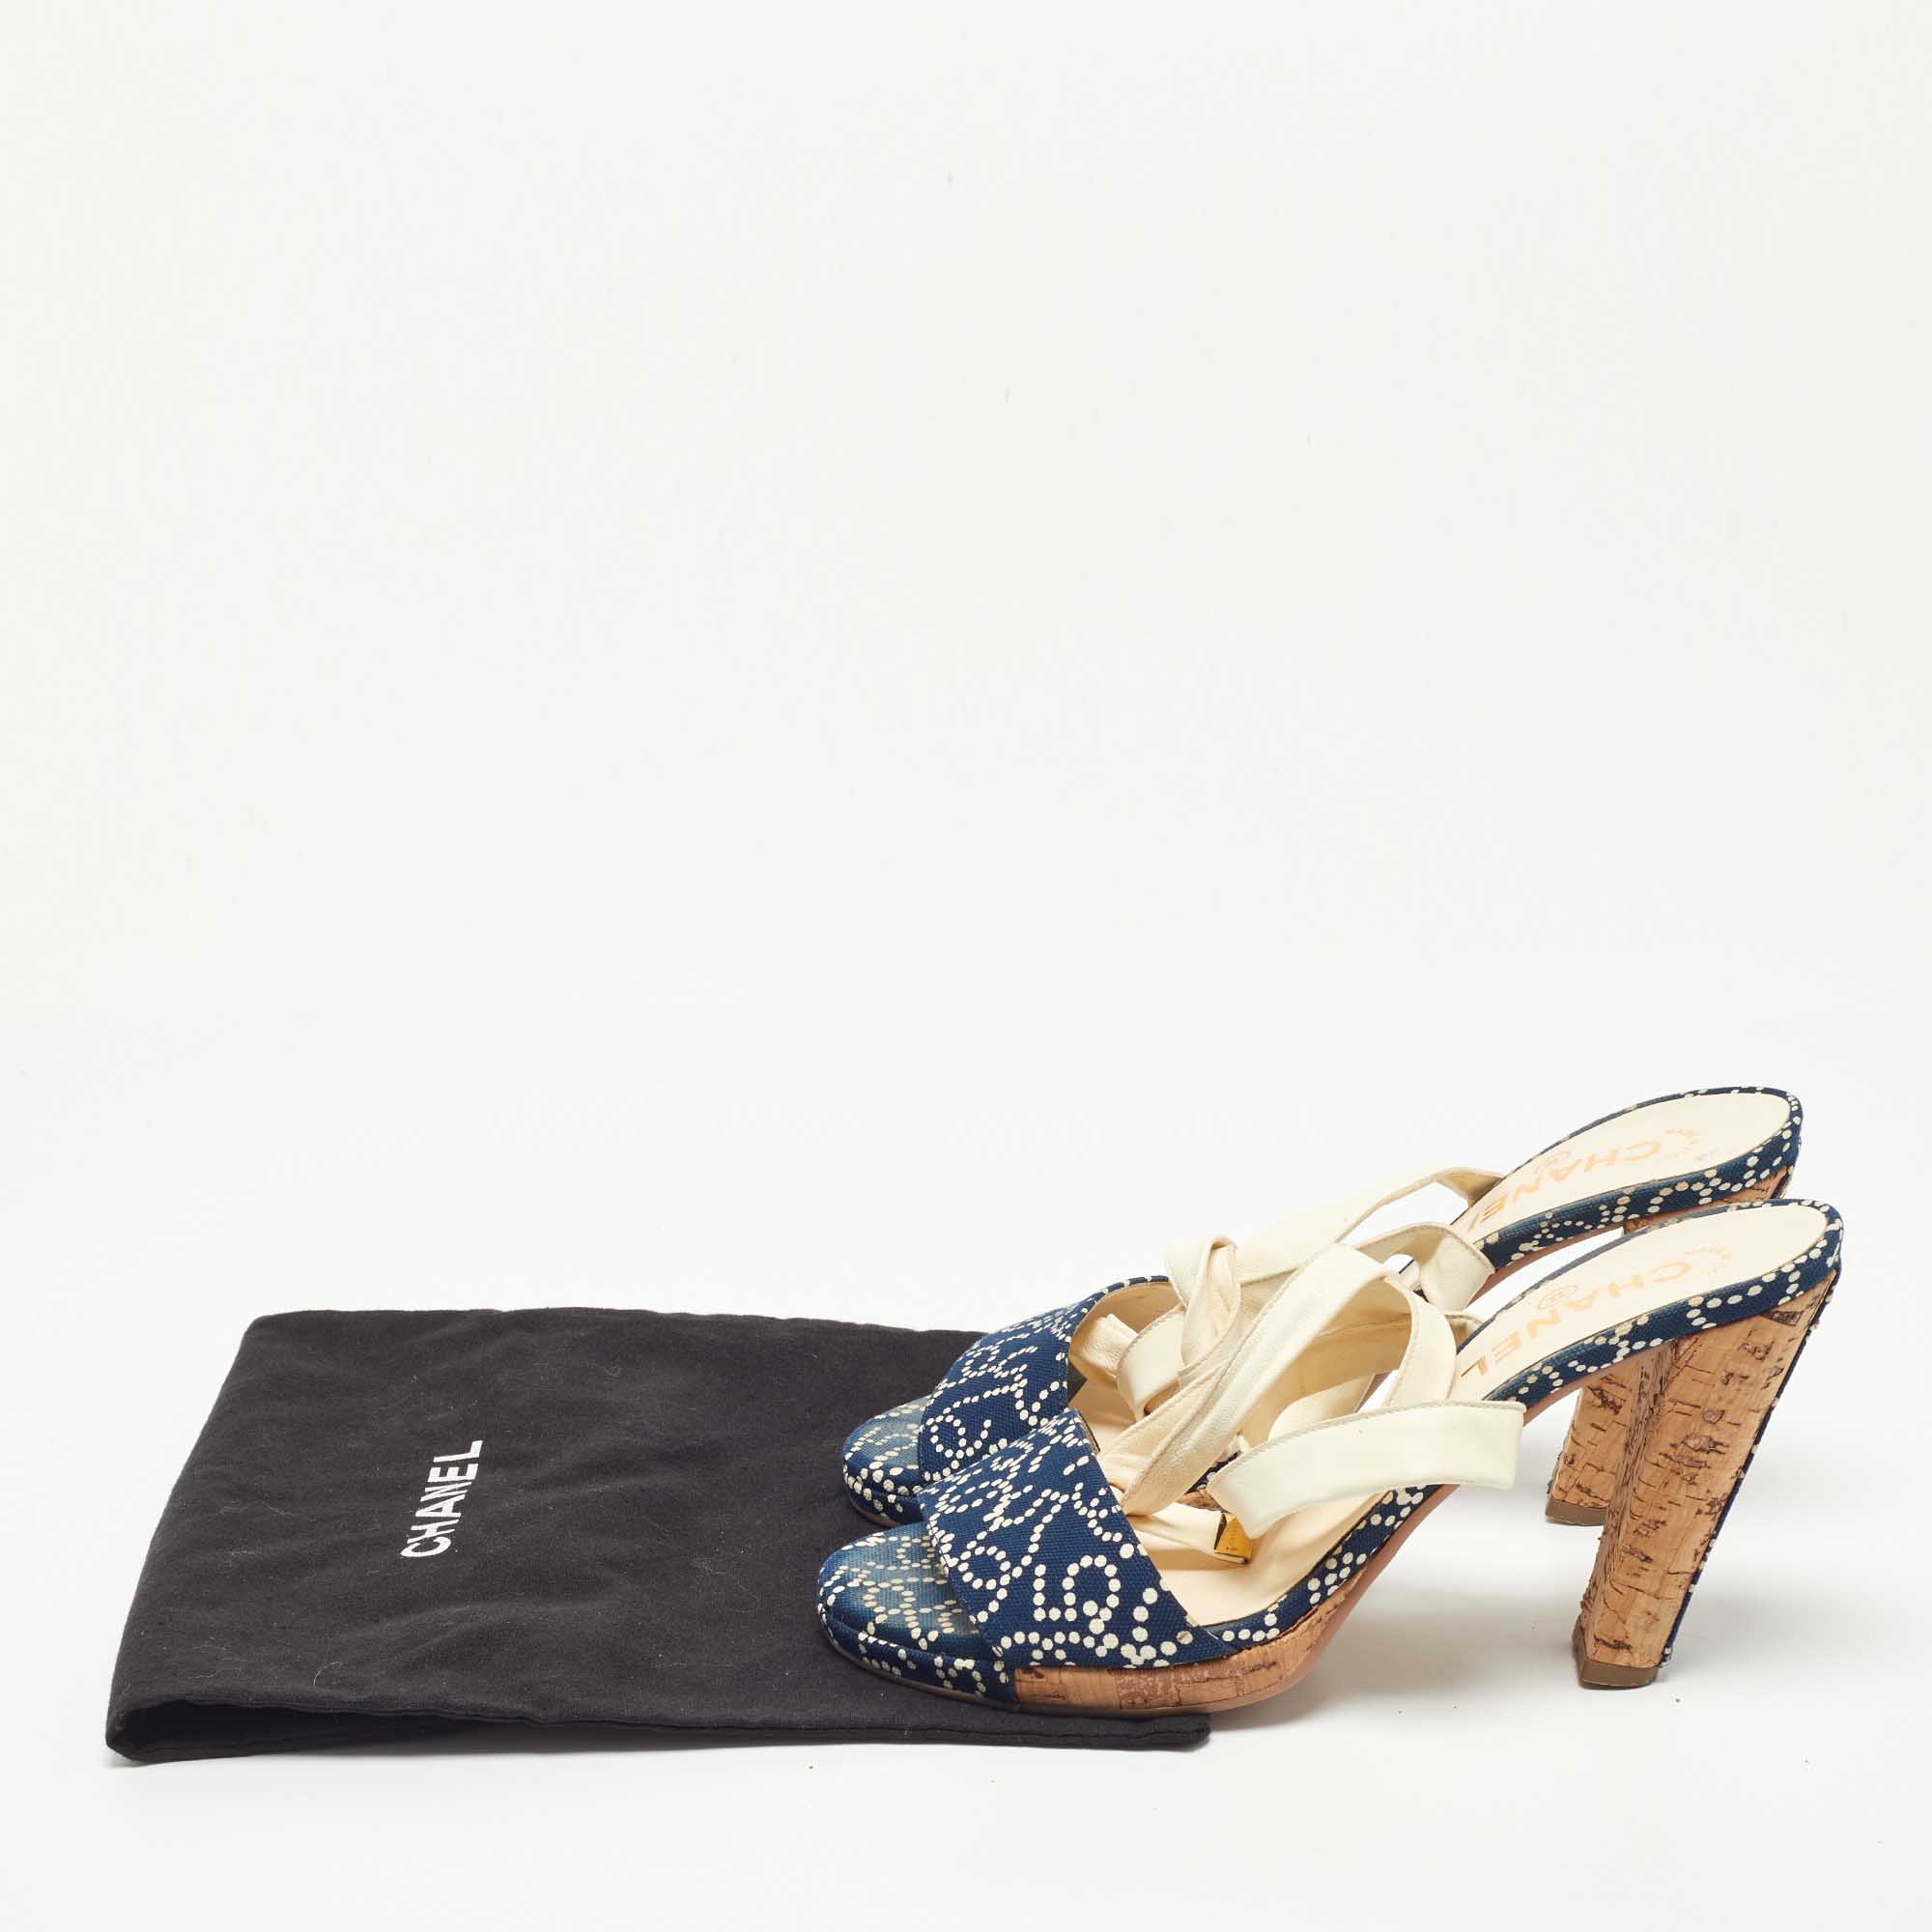 Chanel Navy Blue/White Denim Ankle Wrap Sandals Size 40